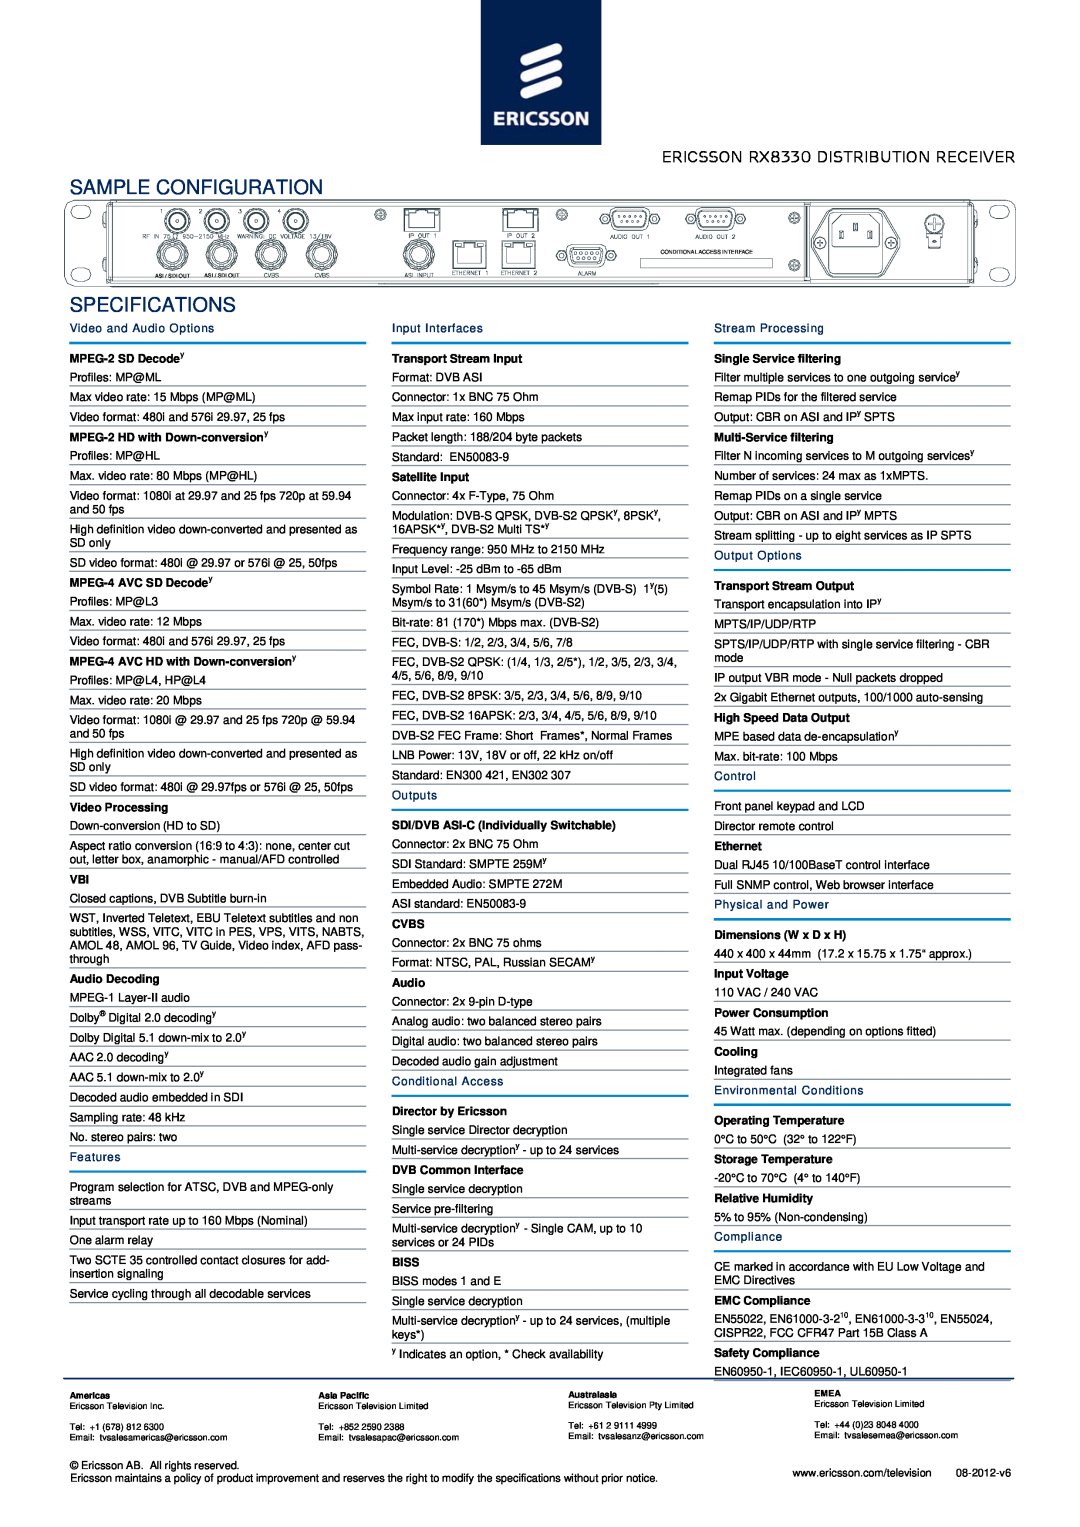 Ericsson manual Sample Configuration, Specifications, Ericsson RX8330 Distribution Receiver 